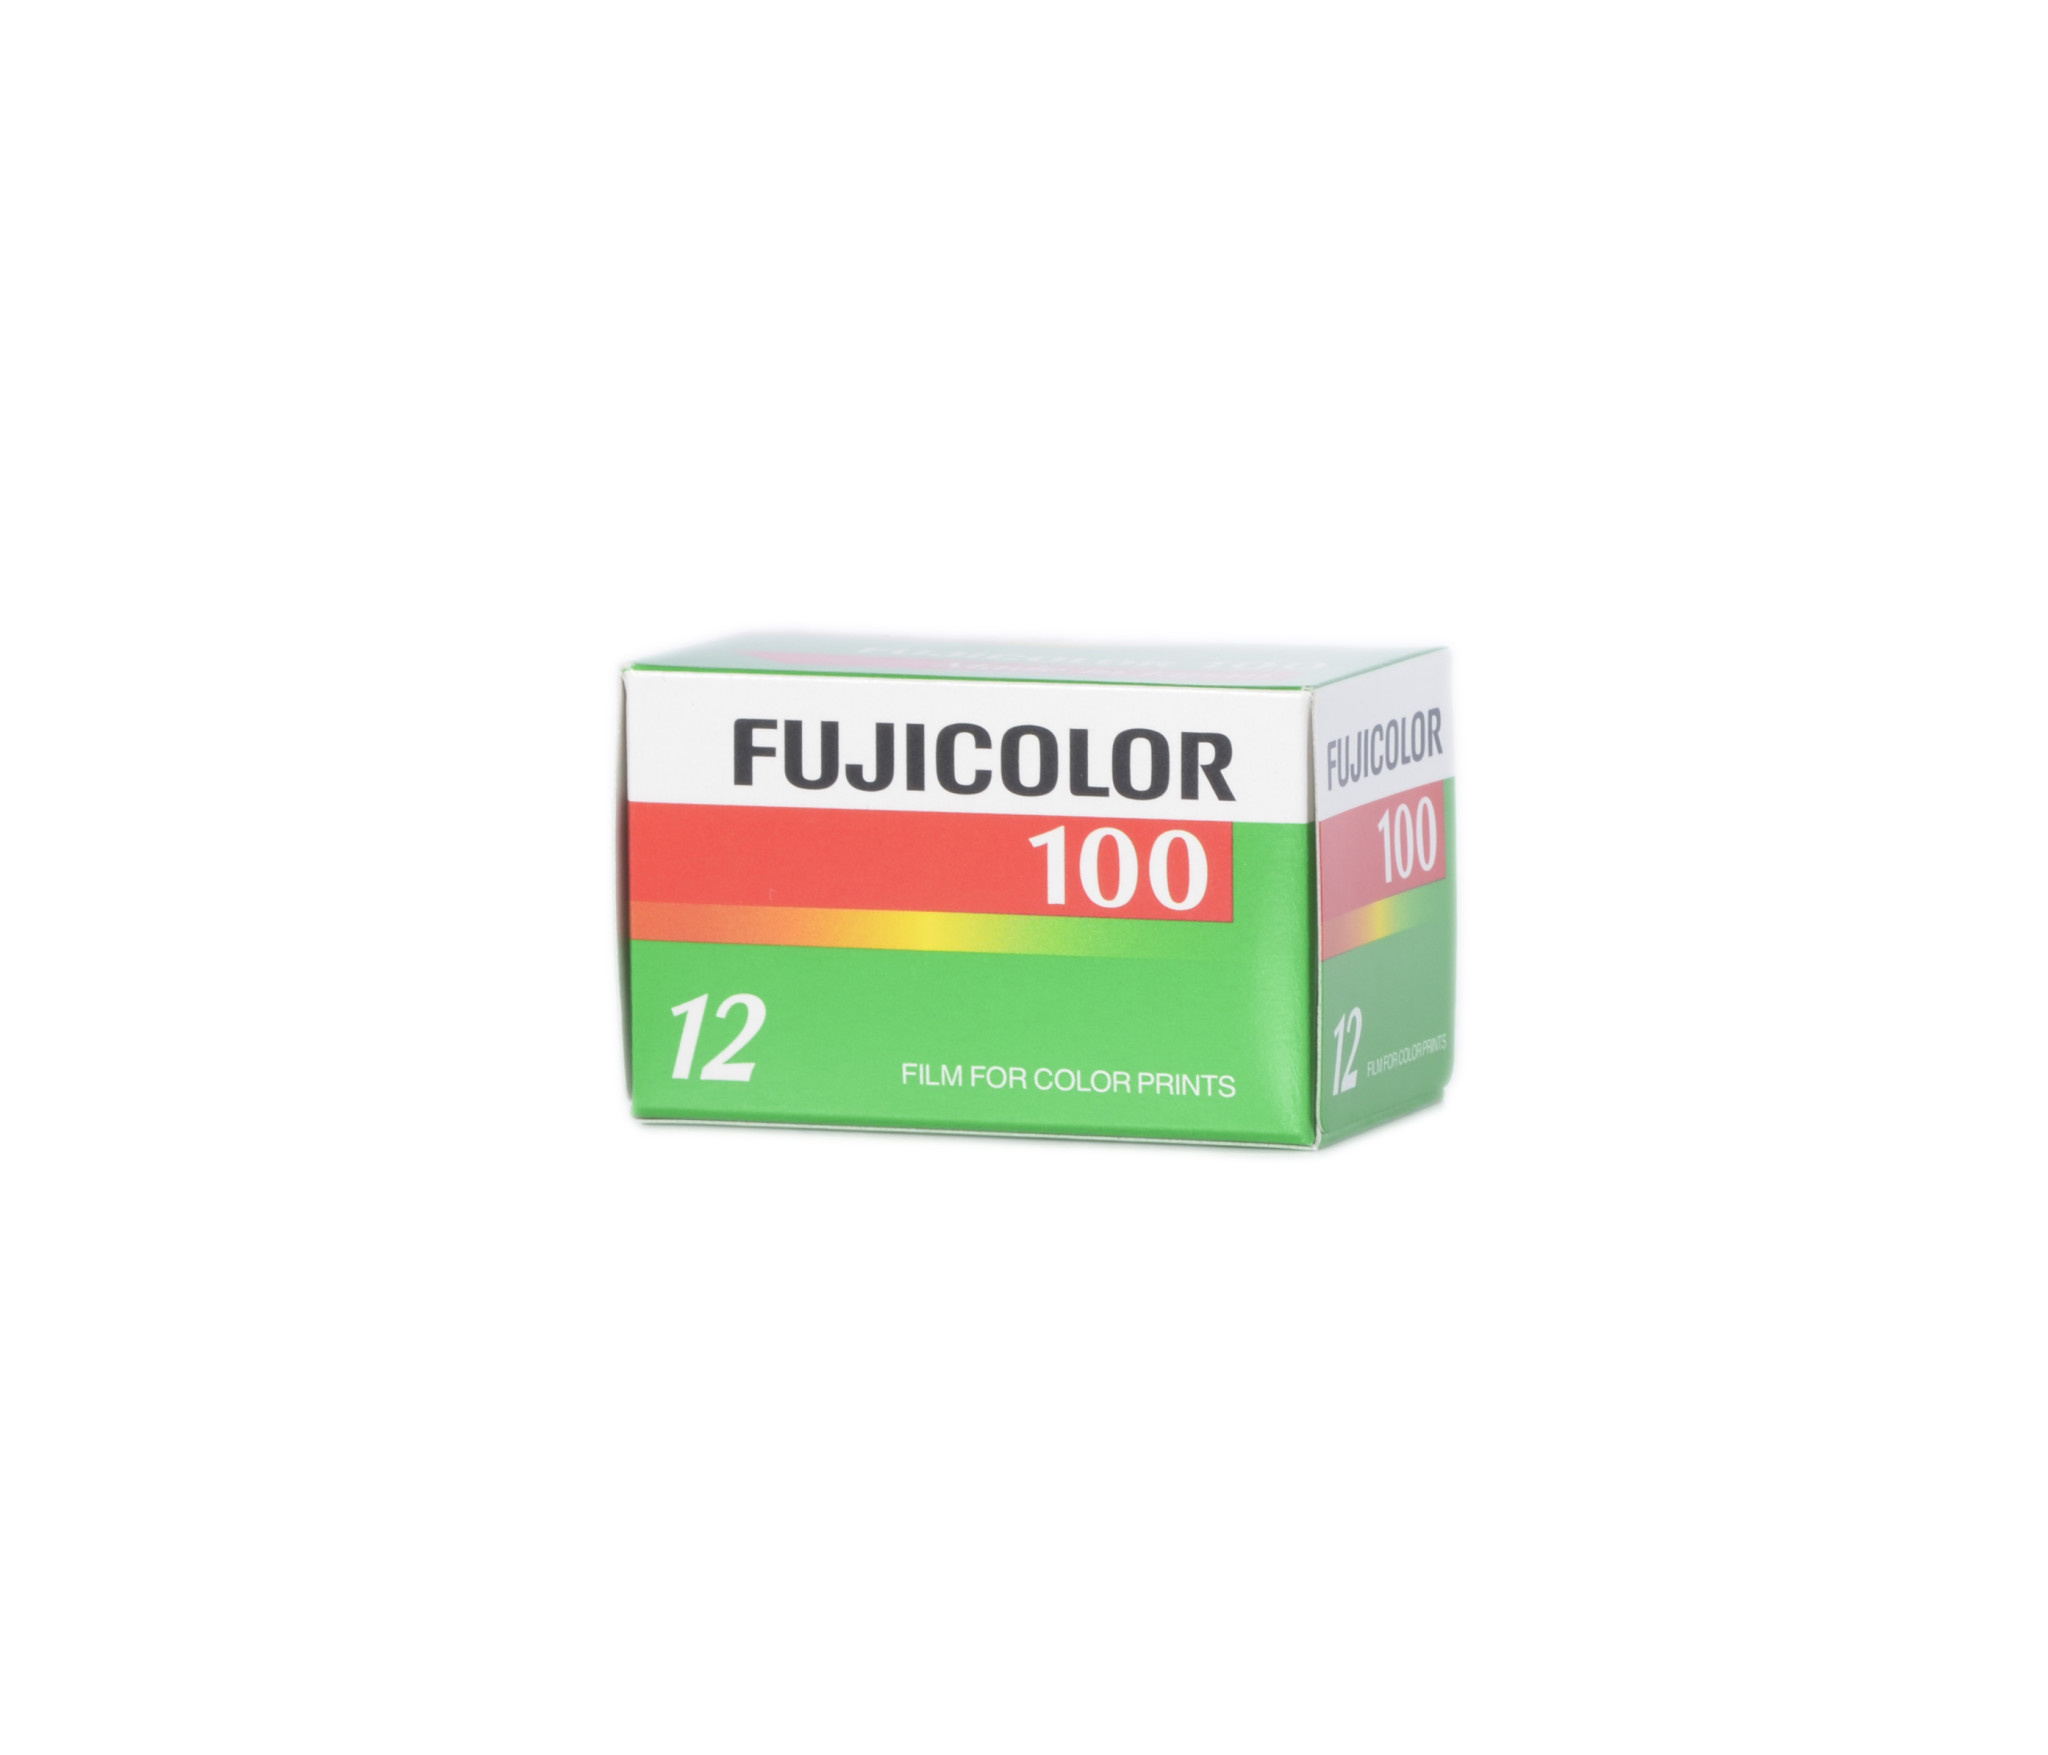 Fujifilm Fujicolor 100 ISO 12 Exp EXPIRED July 2010 - 35mm Film